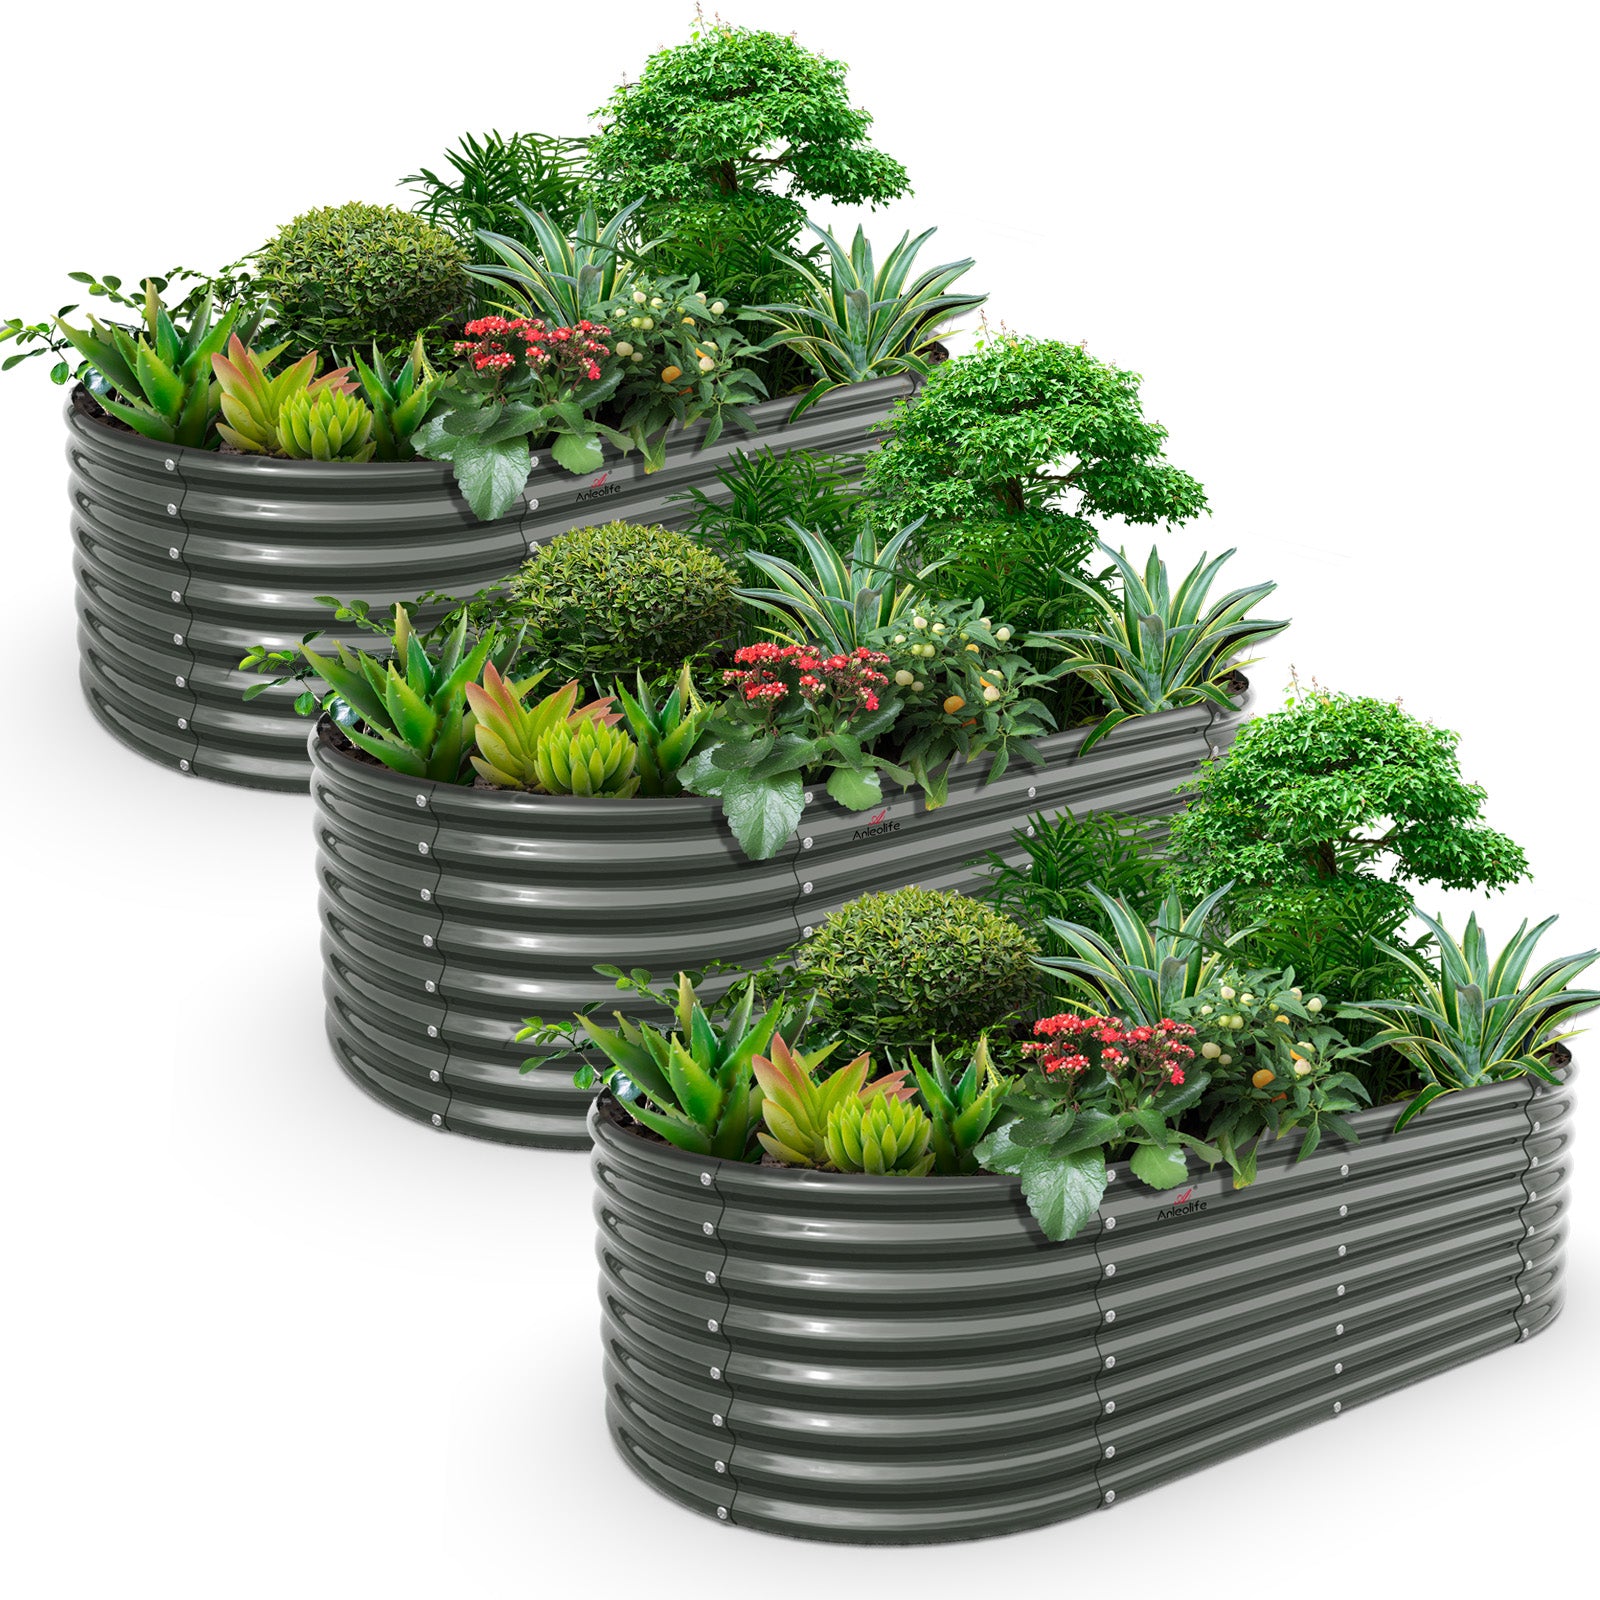 Set of 3: Oval Modular Metal Raised Garden Beds (Grey)